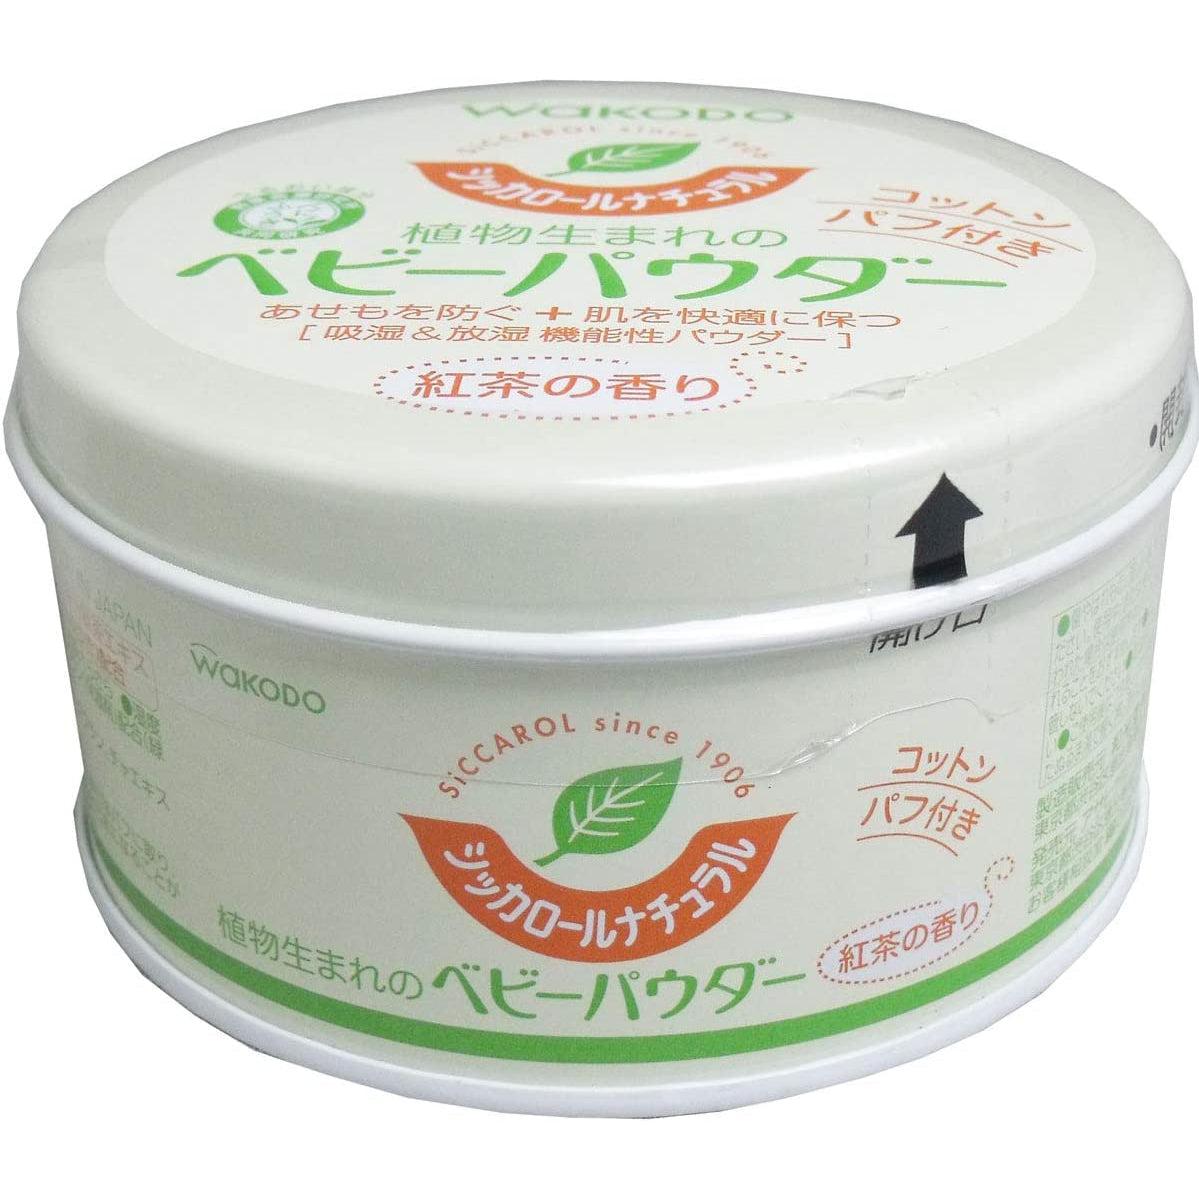 Wakodo Siccarol Japanese Natural Baby Powder 120g